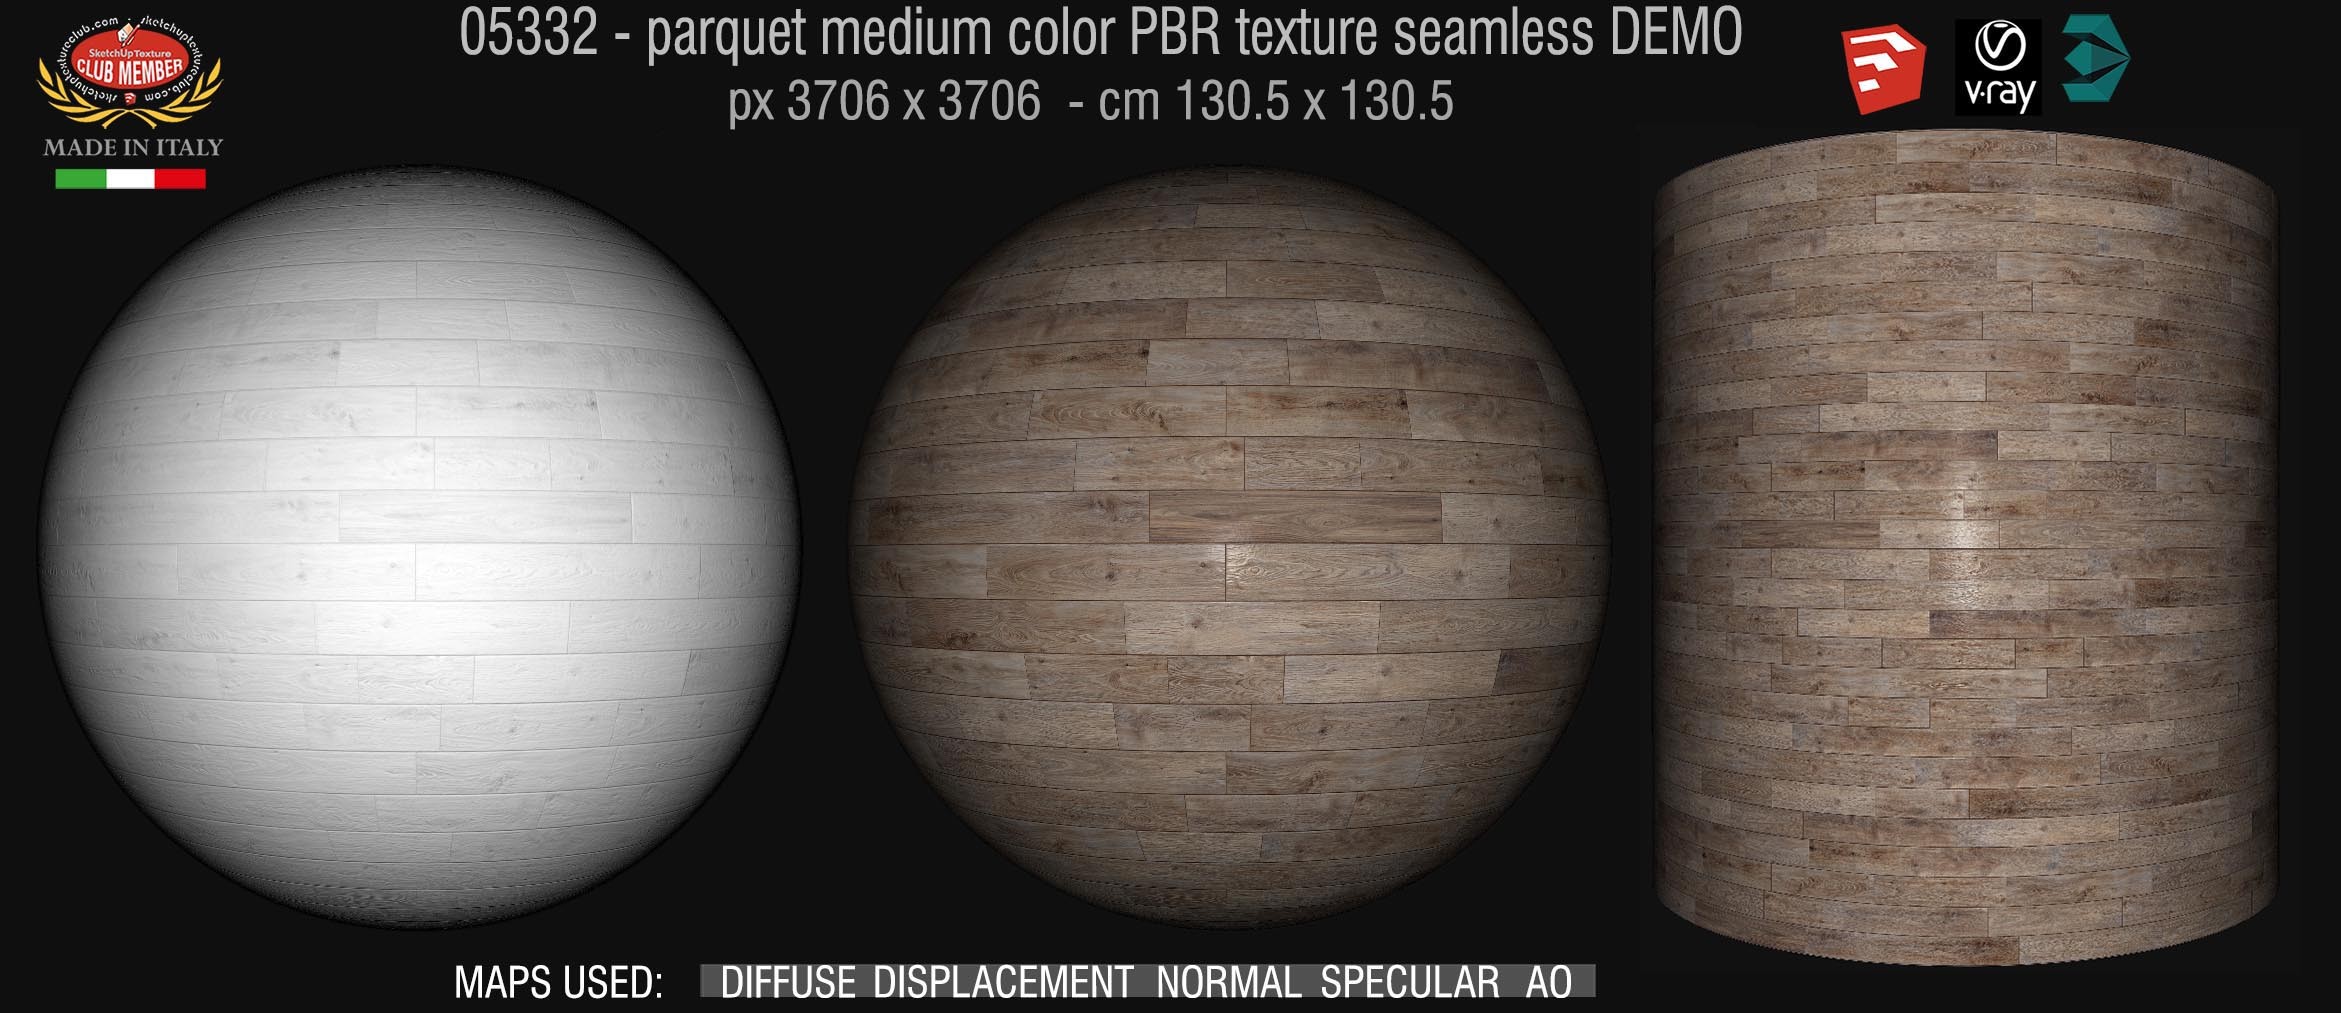 05332 parquet medium color PBR texture seamless DEMO